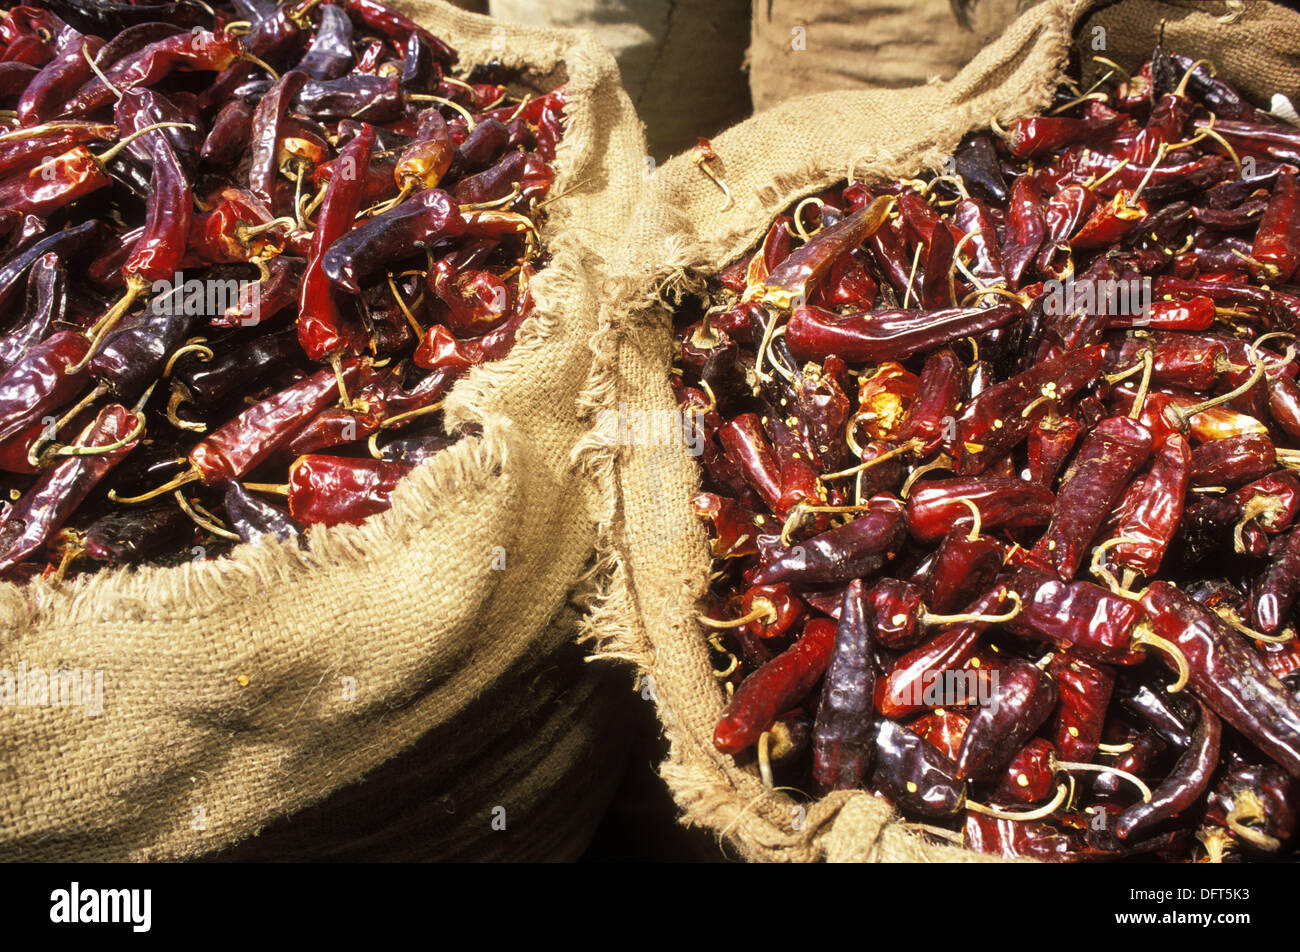 Peppers at market. Denaba village, Kaffa province. Ethiopia Stock Photo